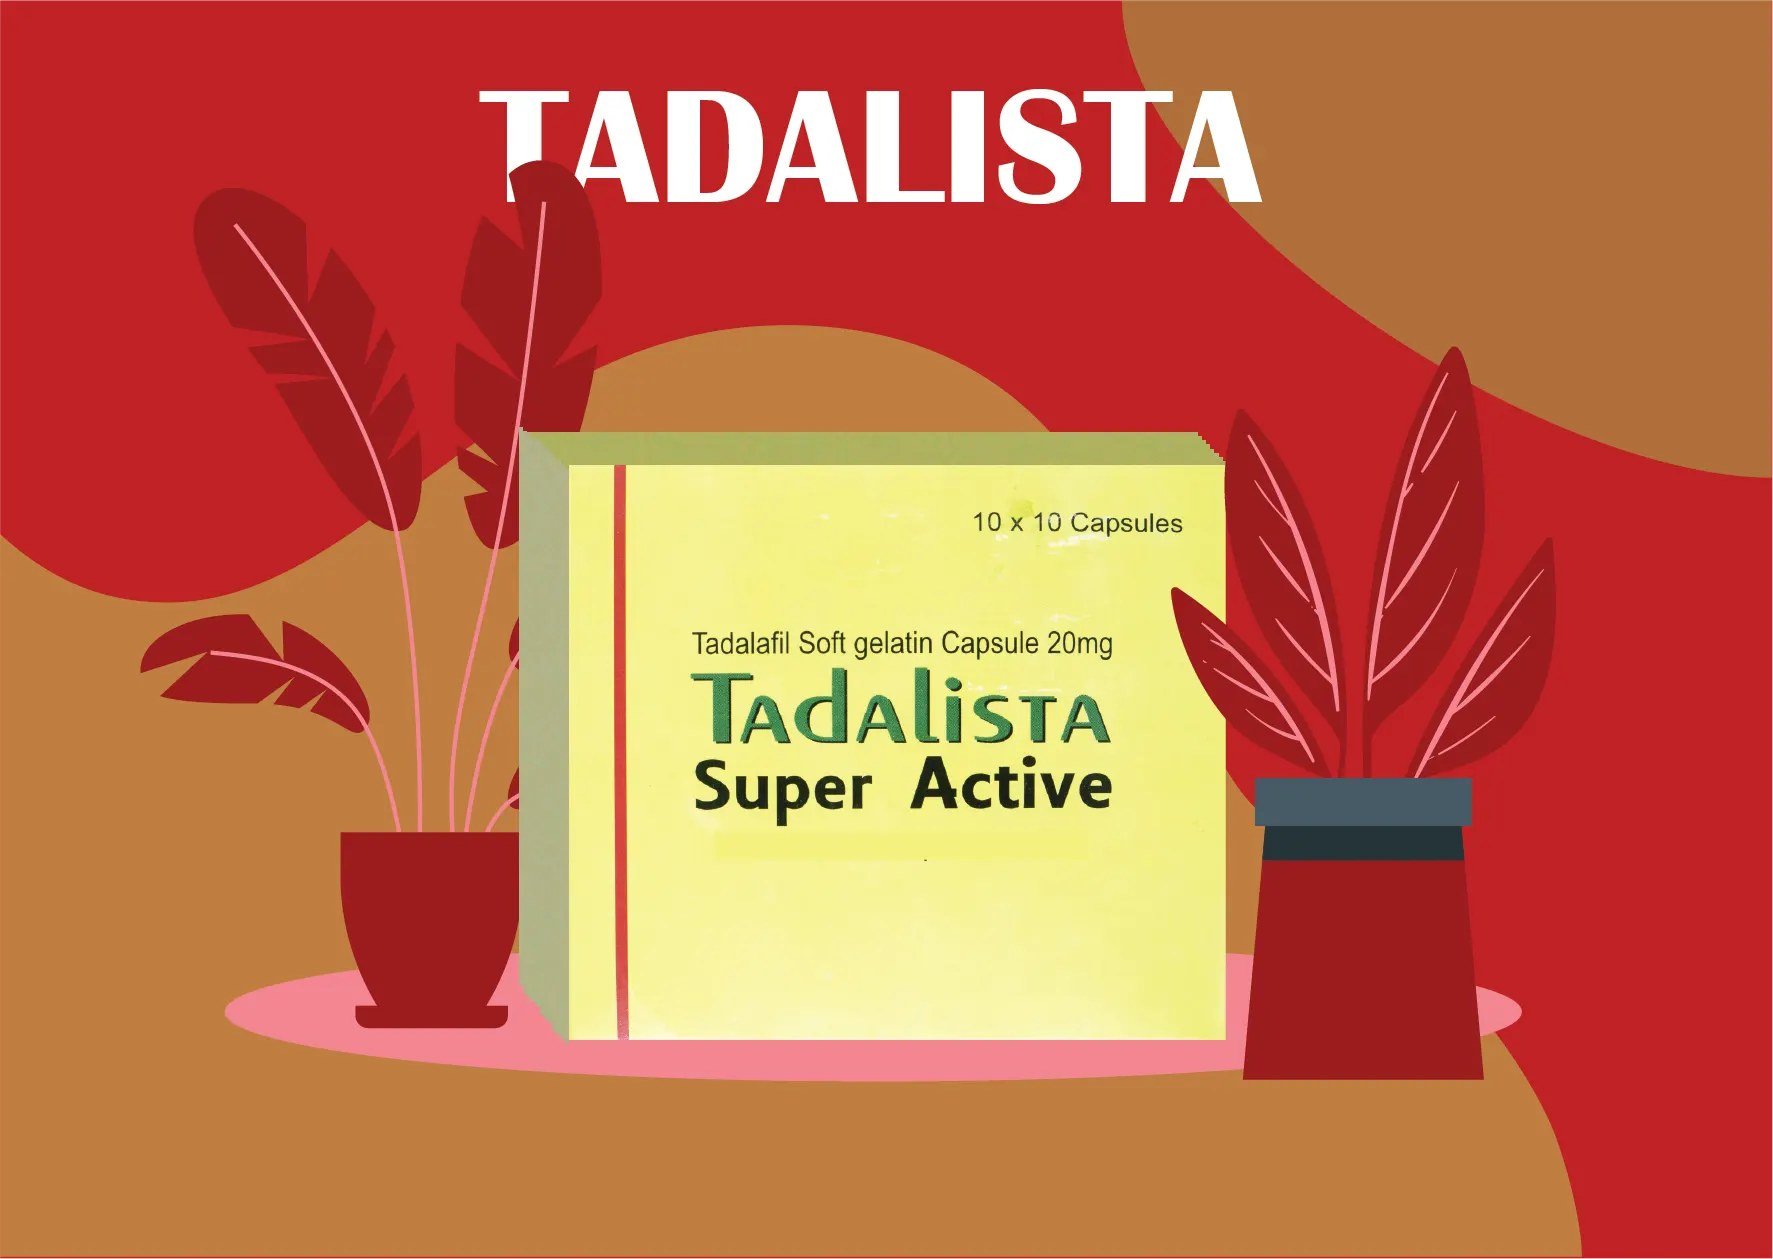 Tadalista – The Comprehensive Guide